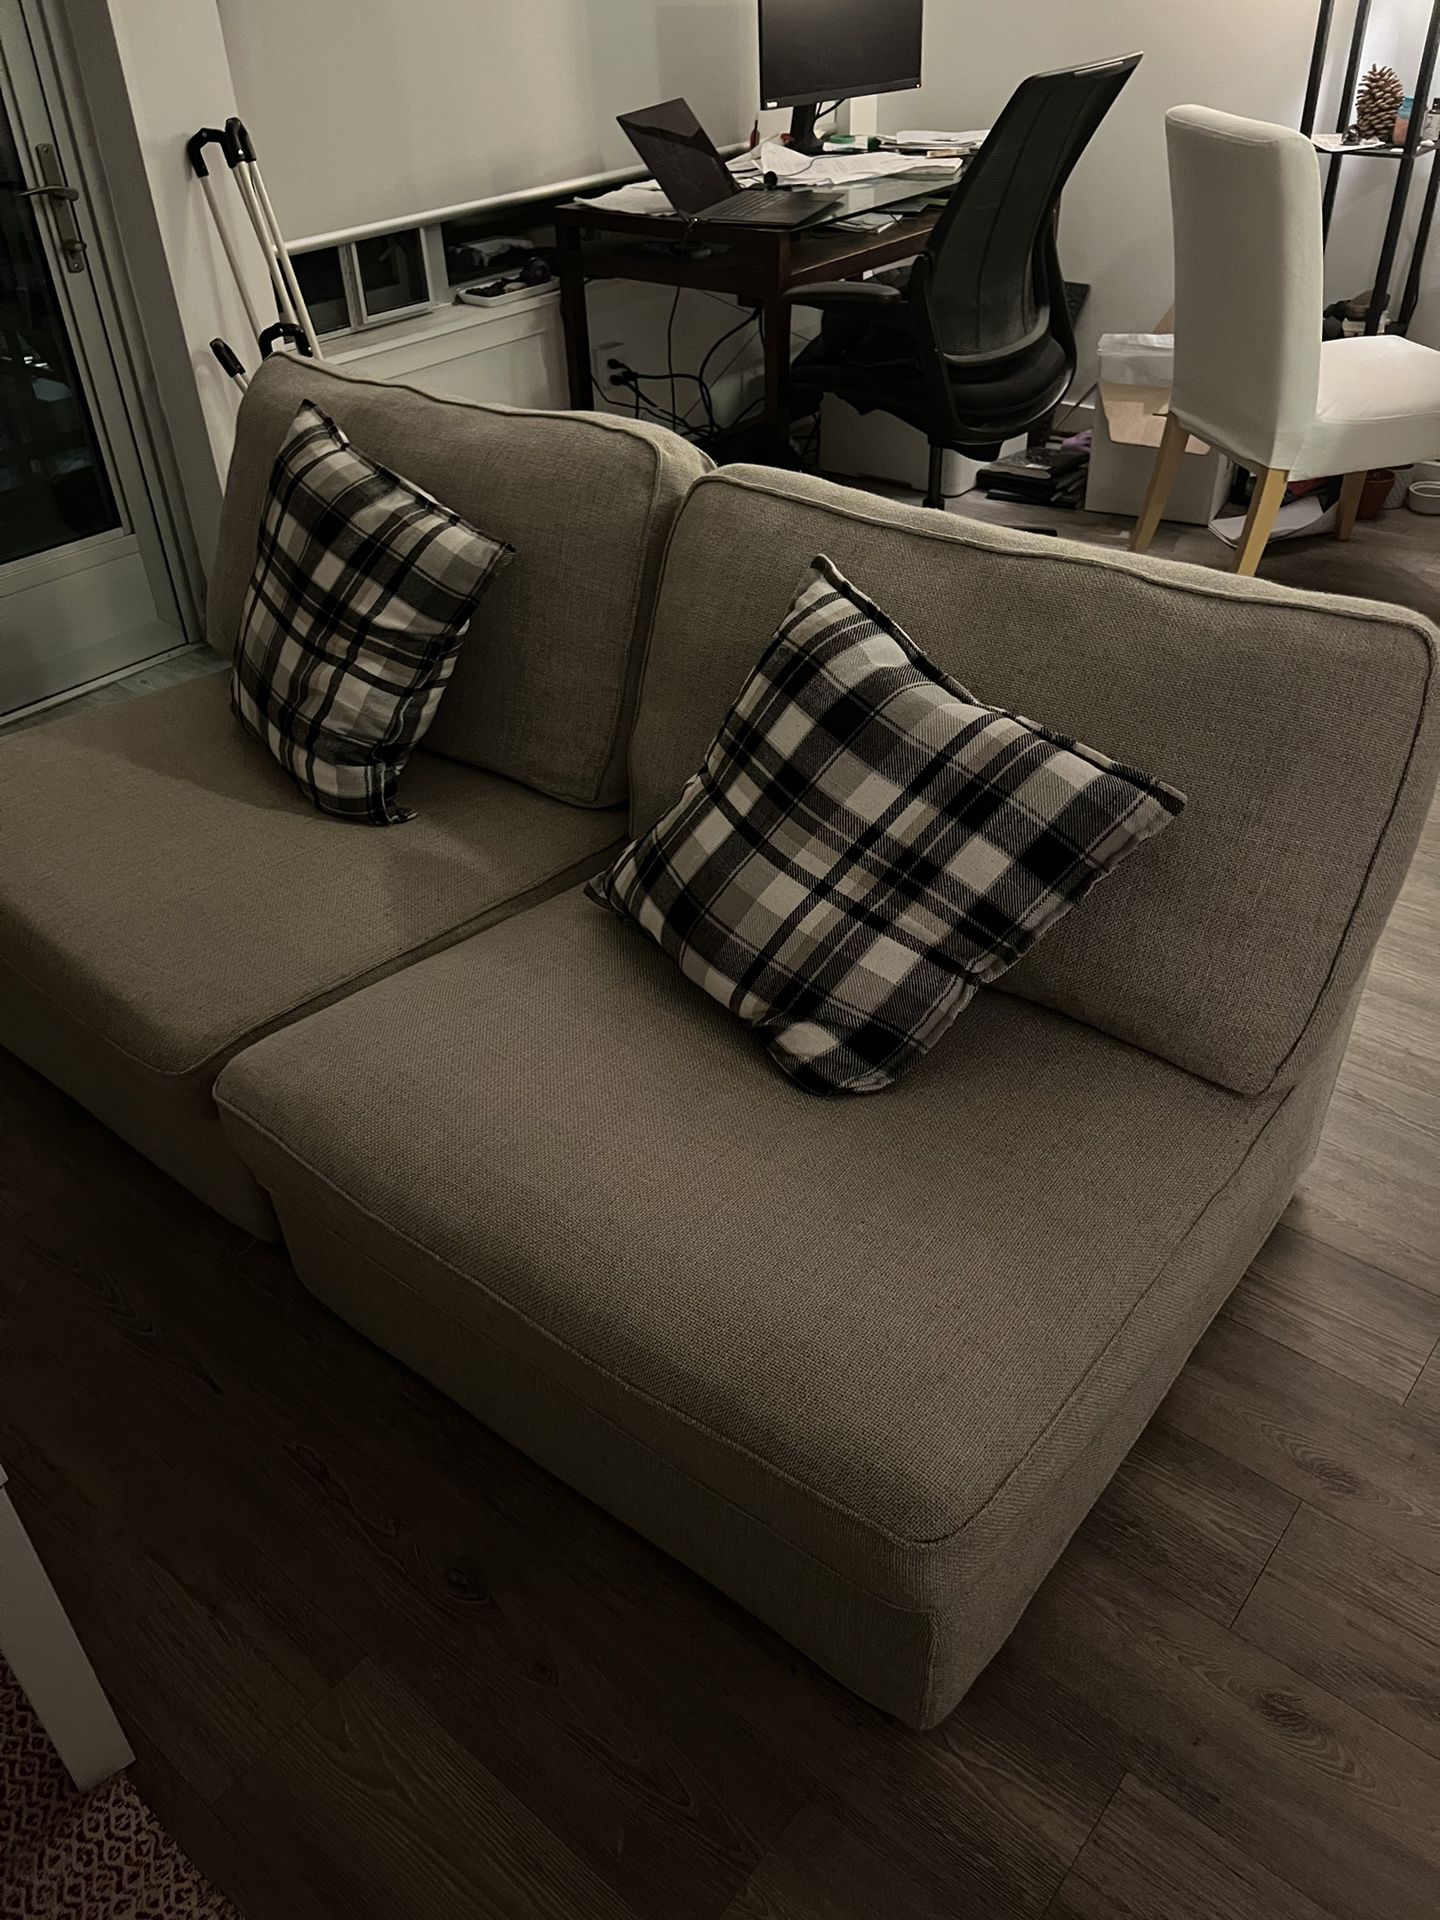 Ikea Kivik 2 Single Seater Sofas